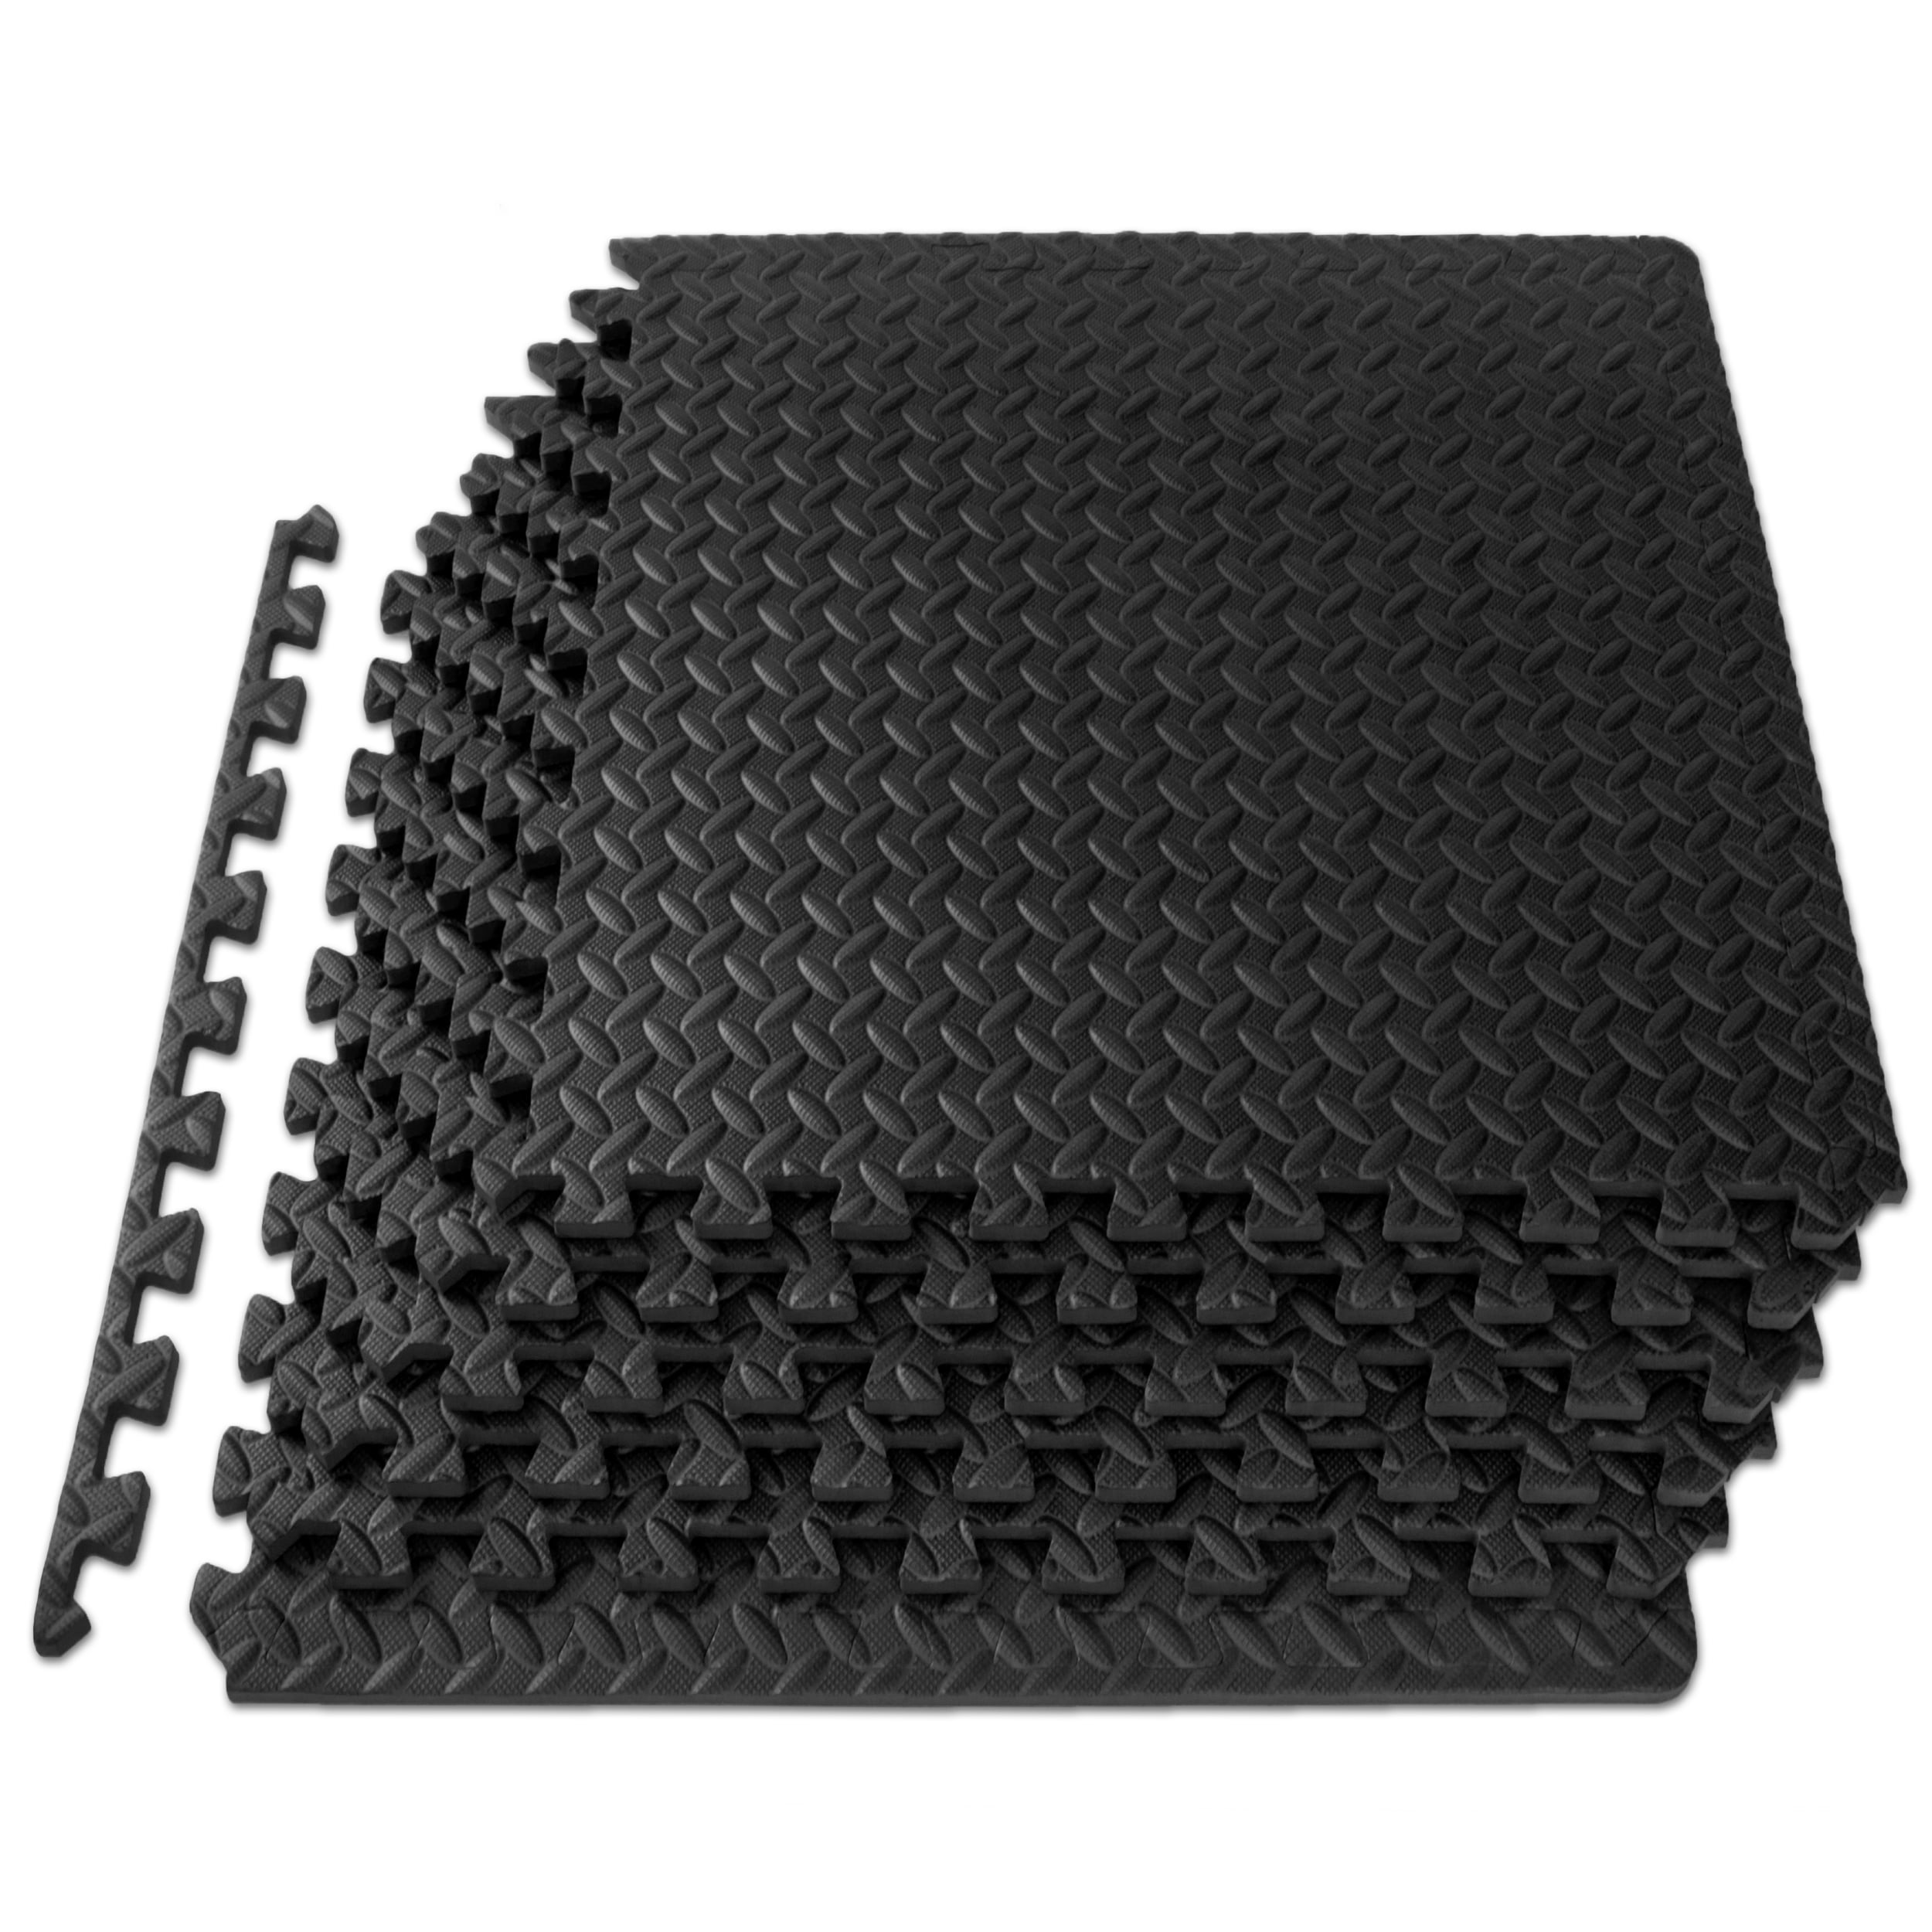 ProsourceFit Puzzle Exercise Mat, 1/2 Thick EVA Foam Interlocking Tiles